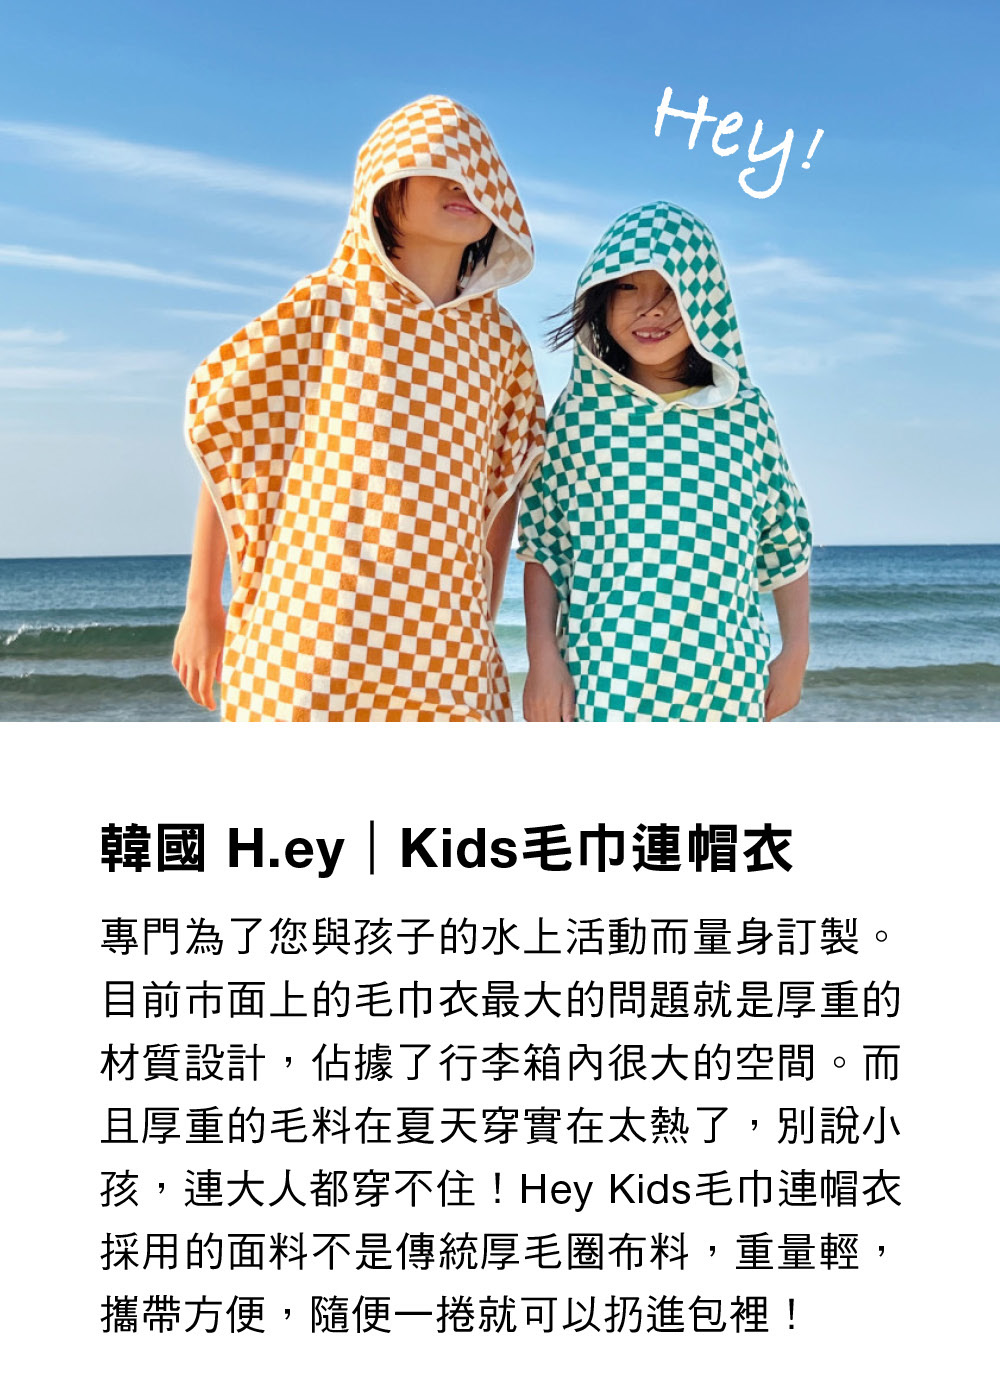 H.ey Kids毛巾連帽衣(條紋藍) 推薦